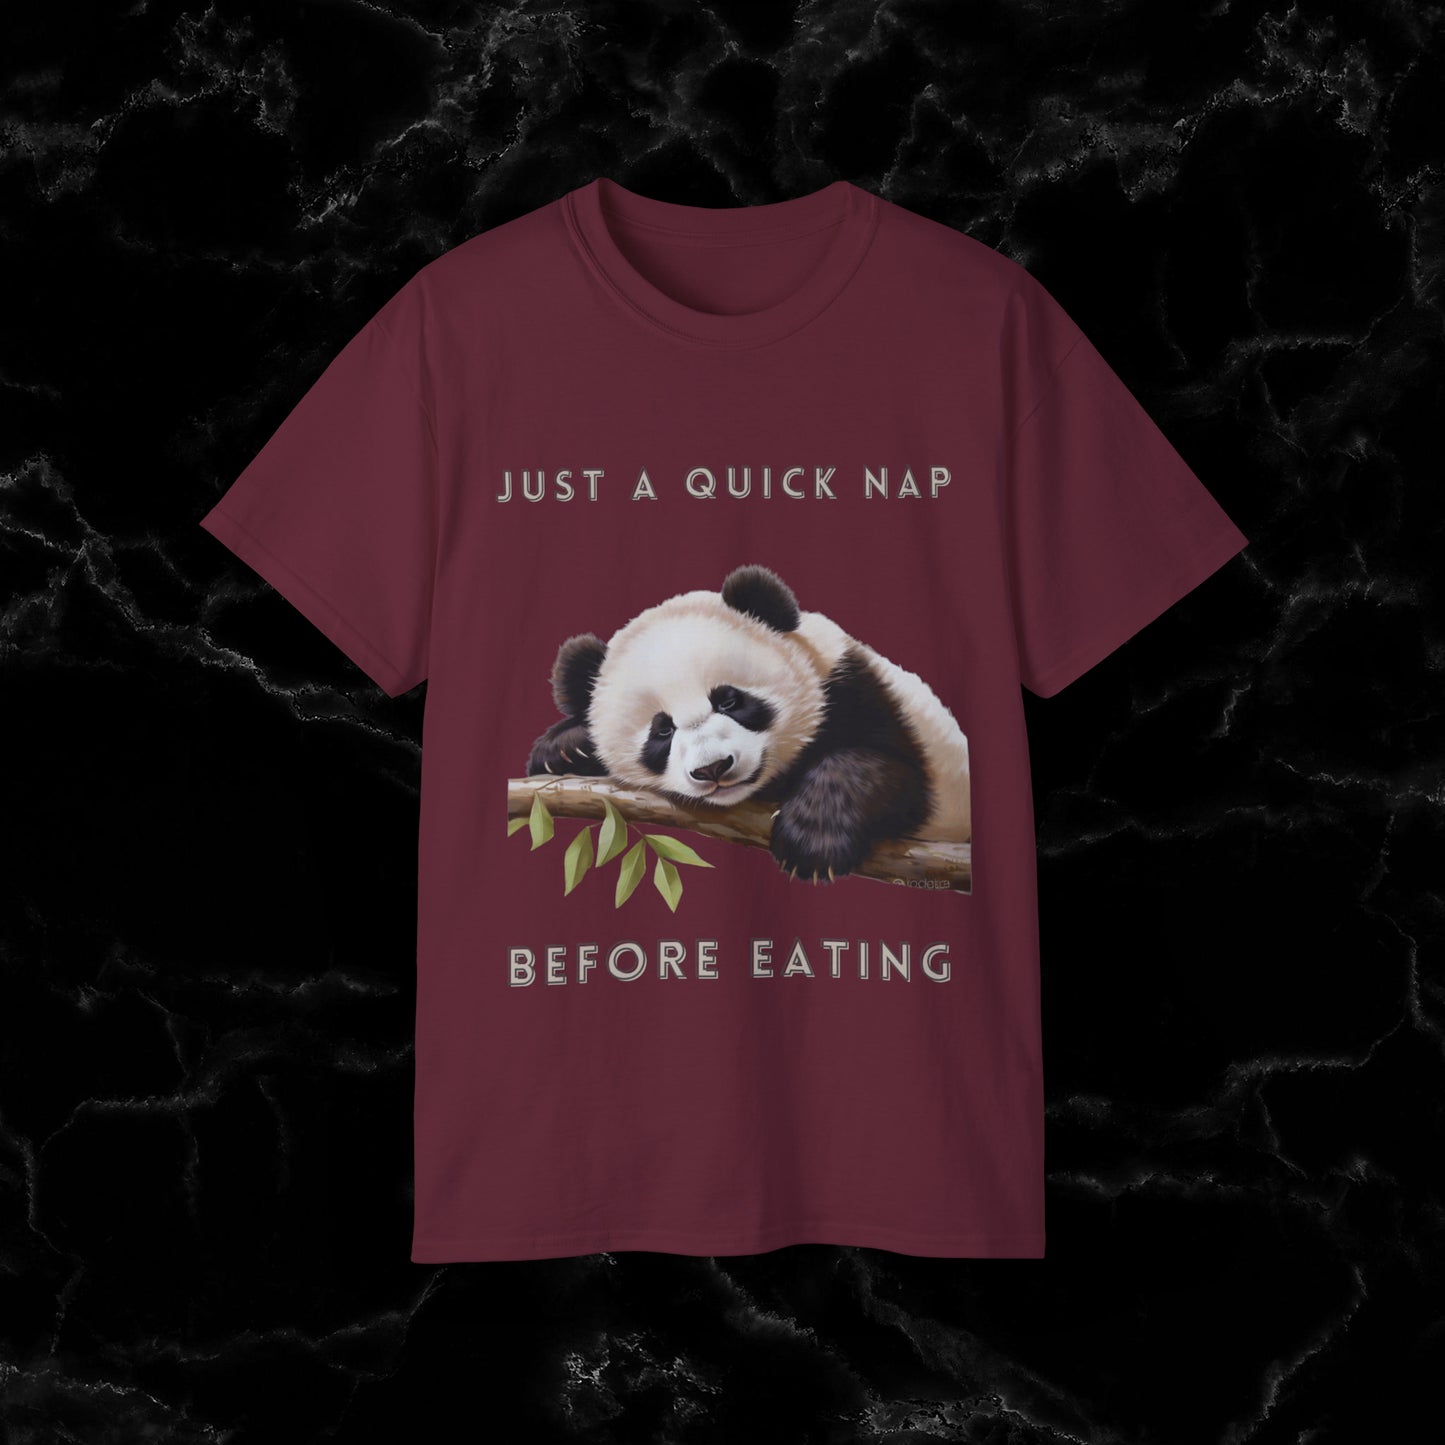 Nap Time Panda Unisex Funny Tee - Hilarious Panda Nap Design - Just a Quick Nap Before Eating T-Shirt Maroon S 